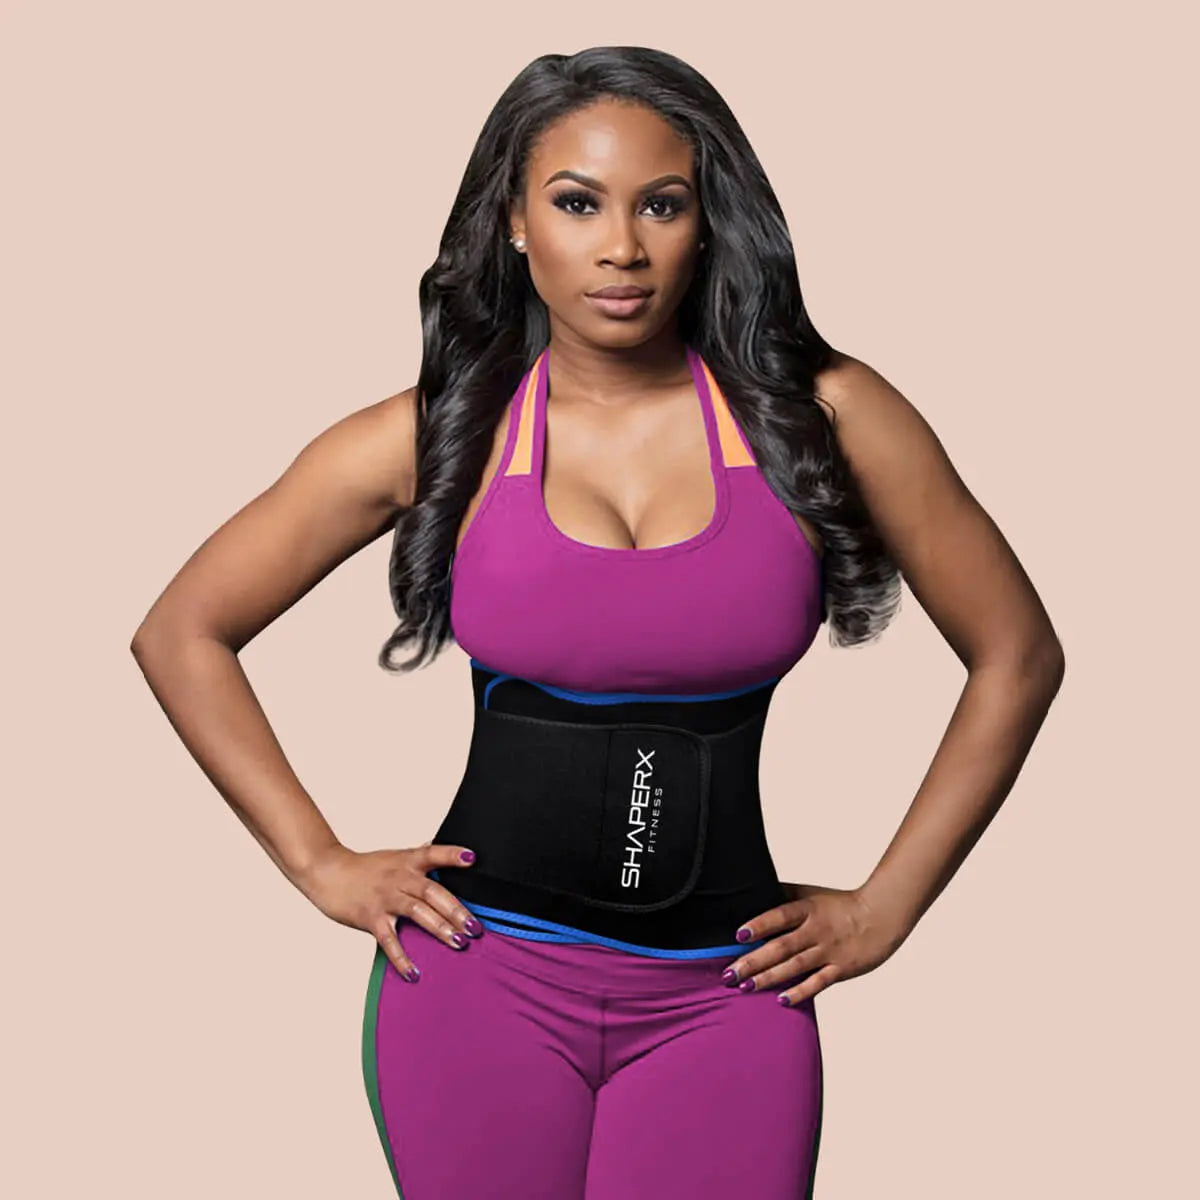 CYDZSW Waist Trainers for Women,Stomach Wraps,Sweat Belt,Belly Shaper Band  Waist Trimmer Workout Gym Accessories Pink(43''x8'')